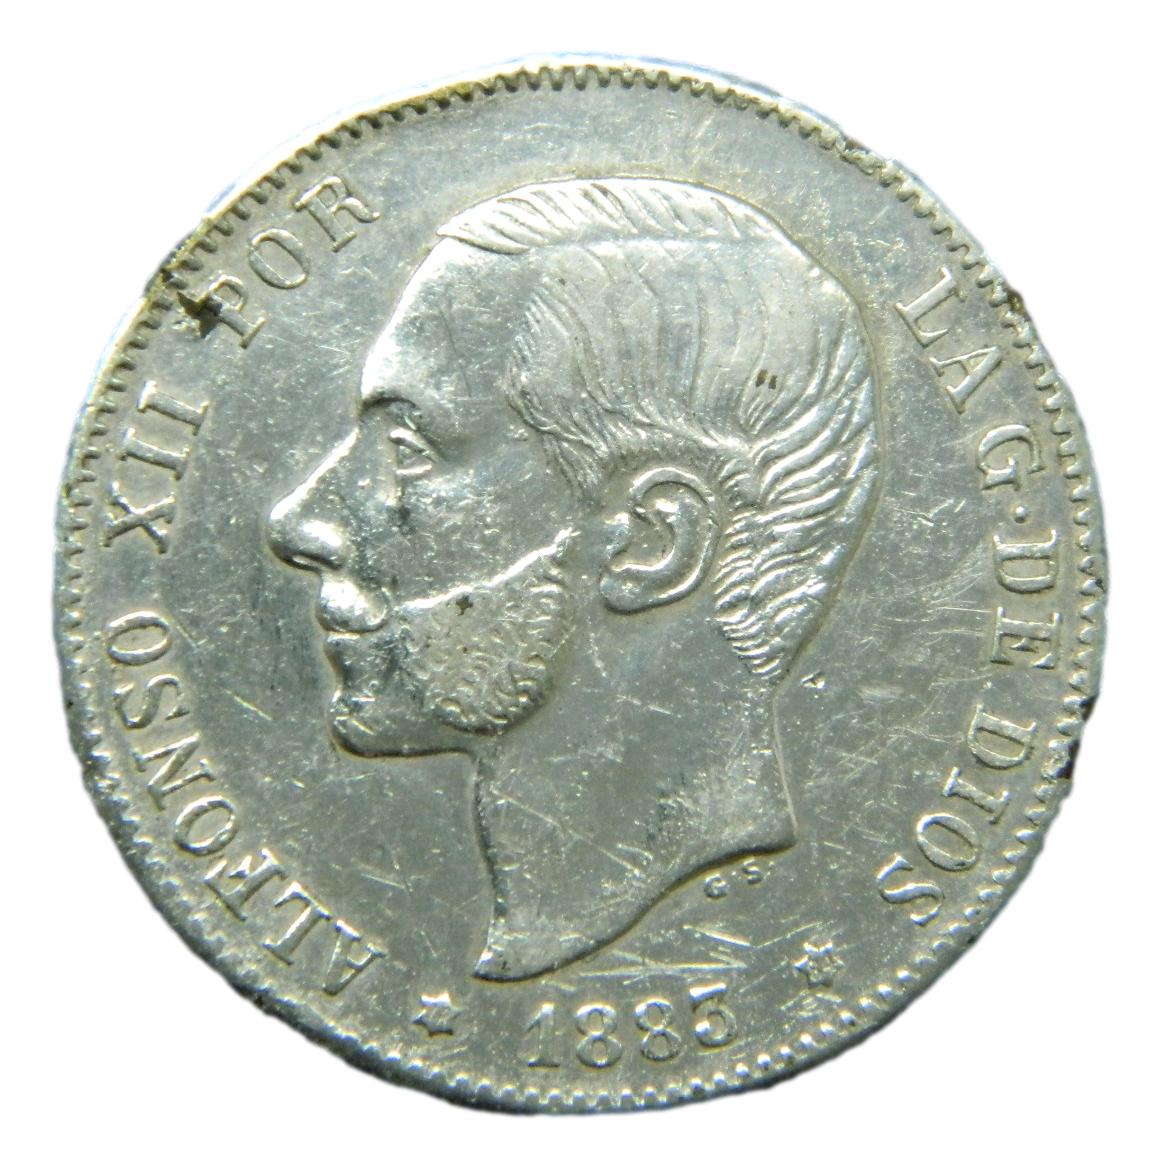 1883 - ALFONSO XII - 2 PESETAS - MSM